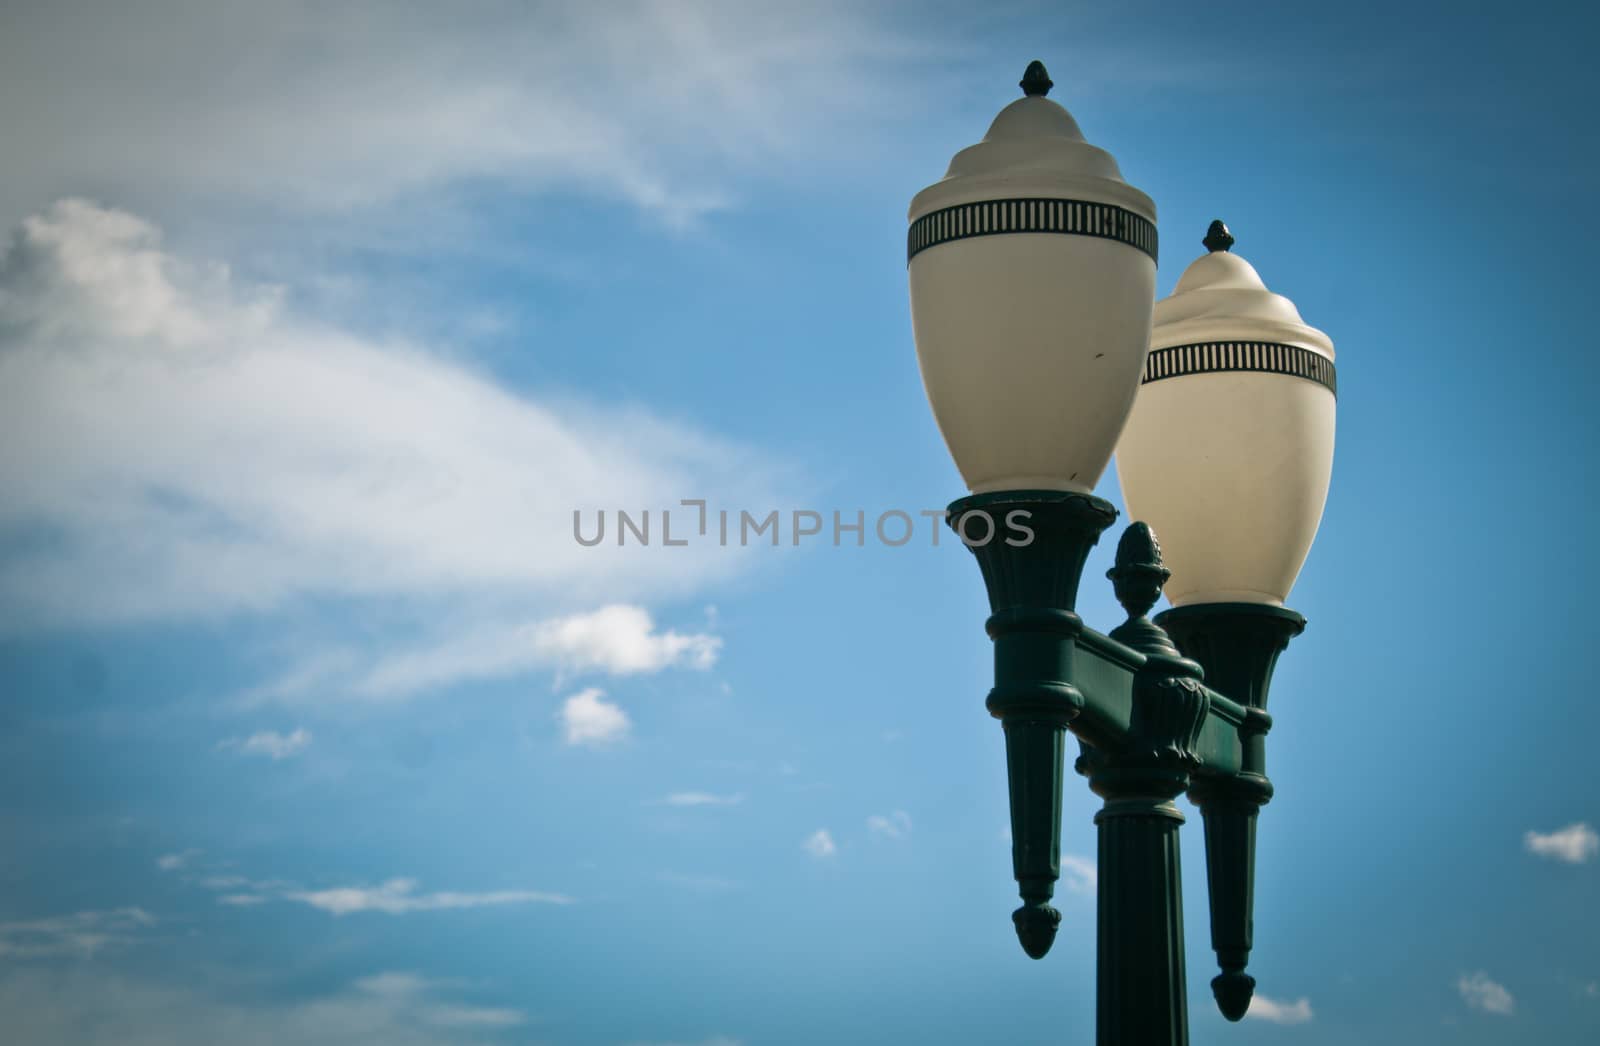 Classic lighting pole against blue sky by gigiobbr